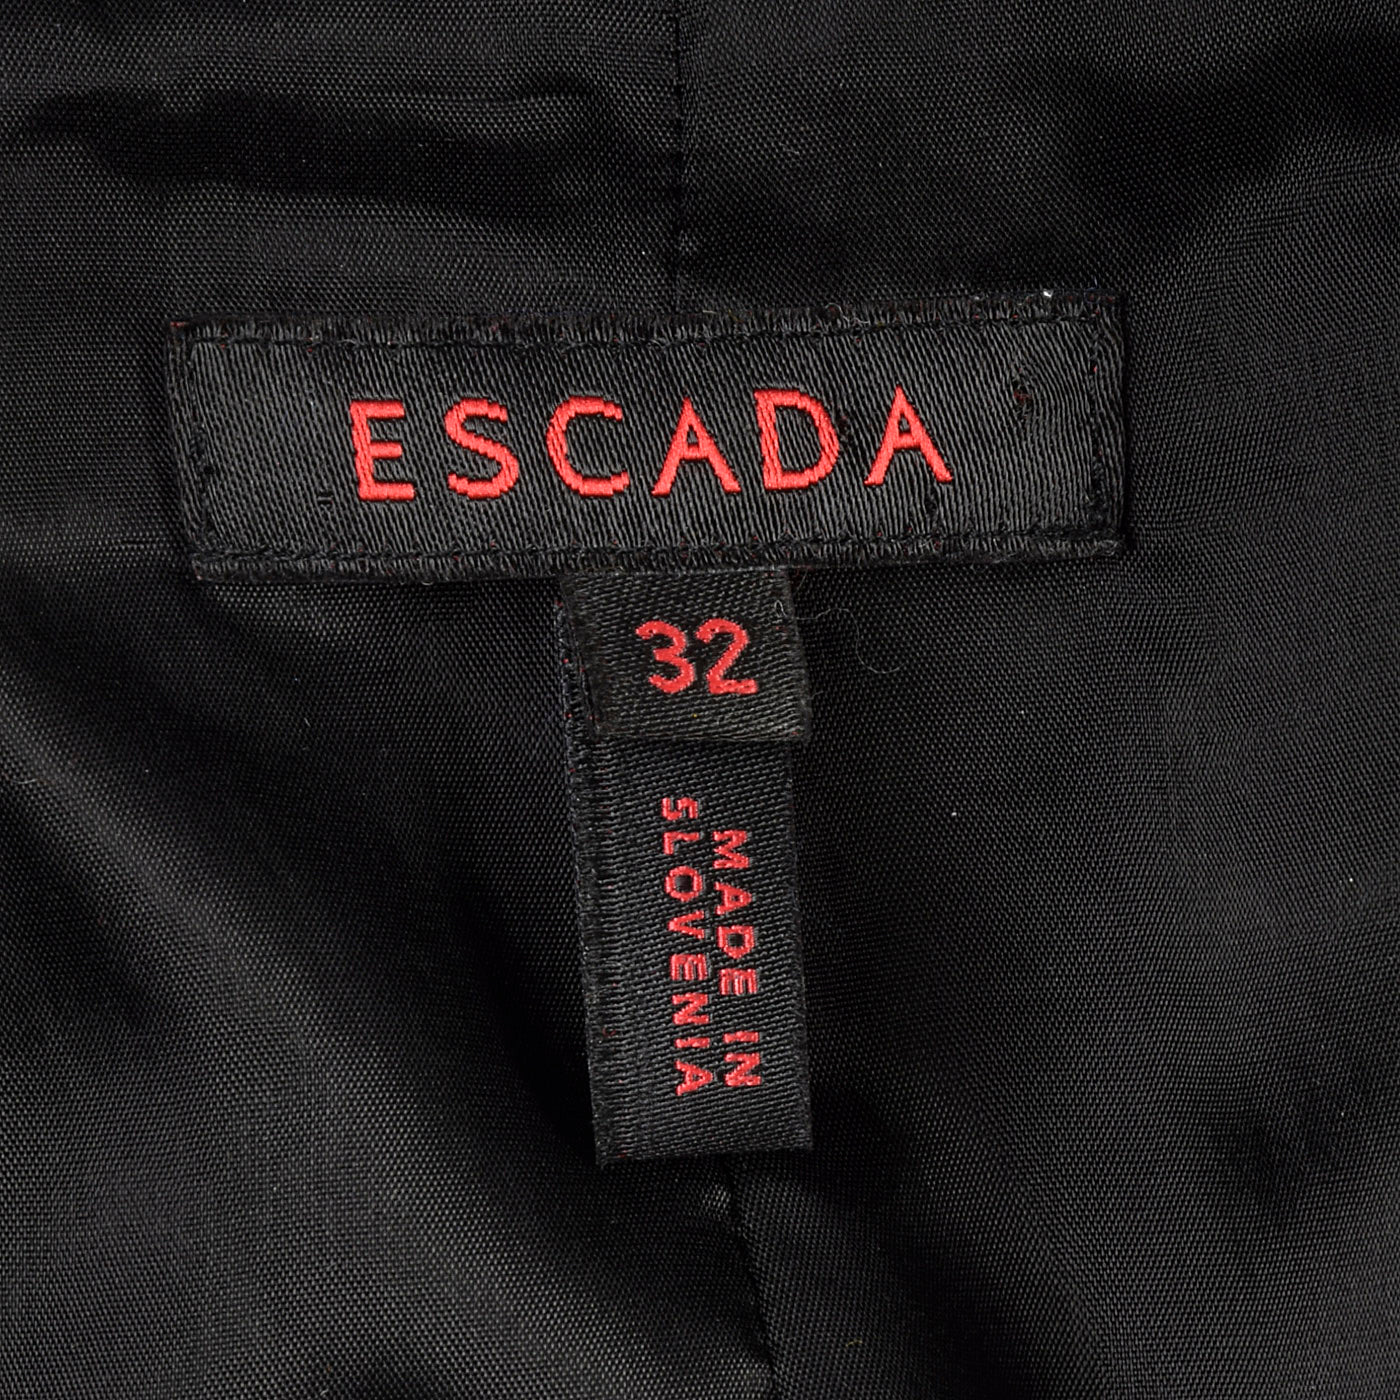 1990s Escada Black Pencil Skirt with Draped Detail